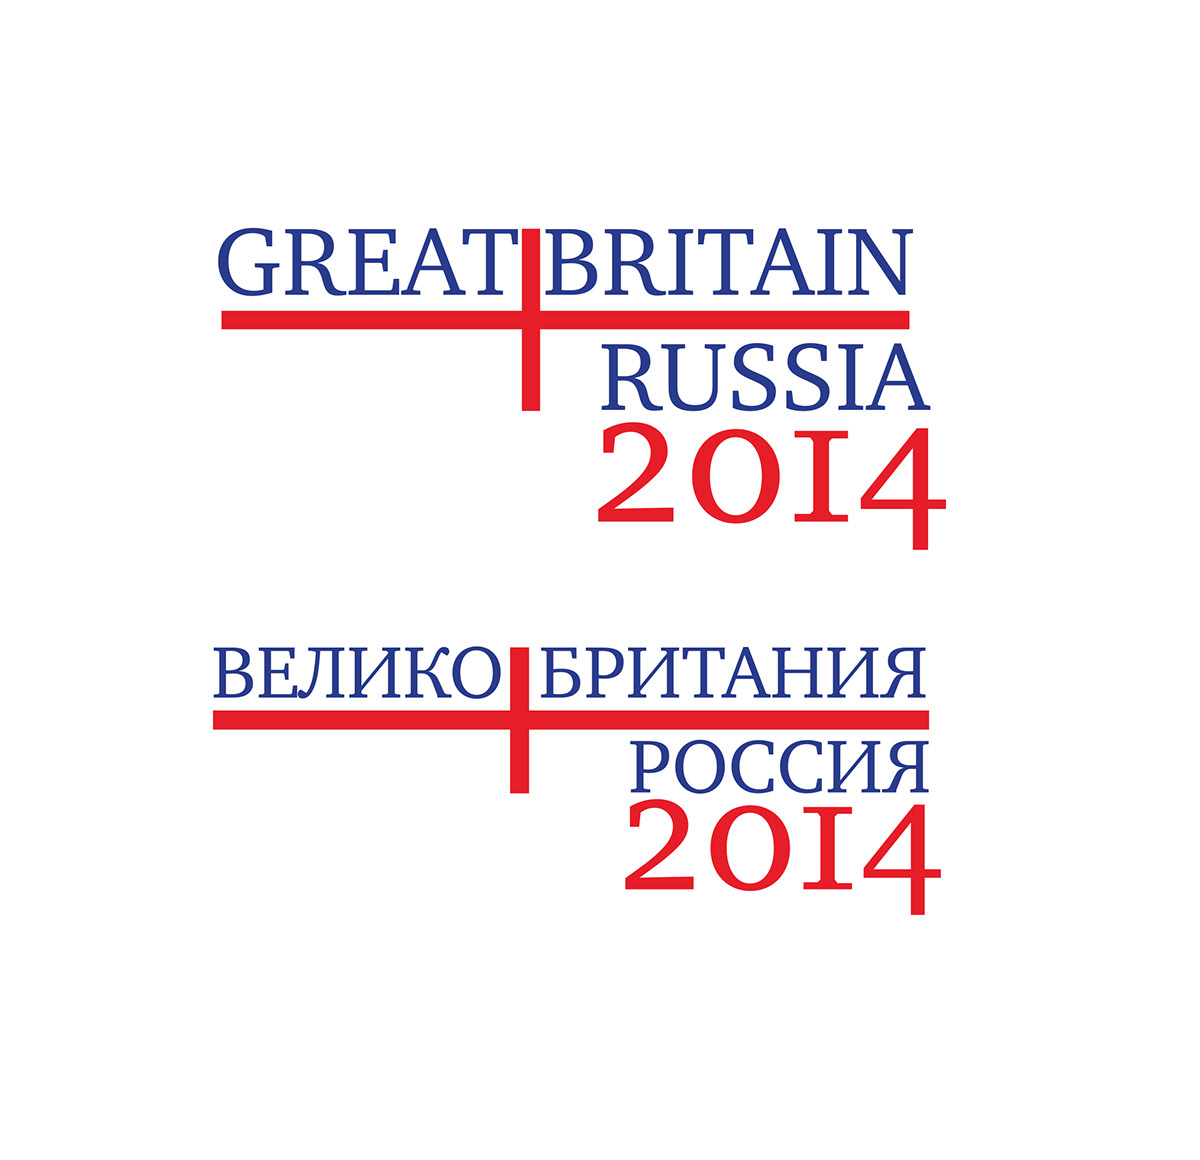 CULTURE 2014 UK-Russia Year great britain Russia British Council